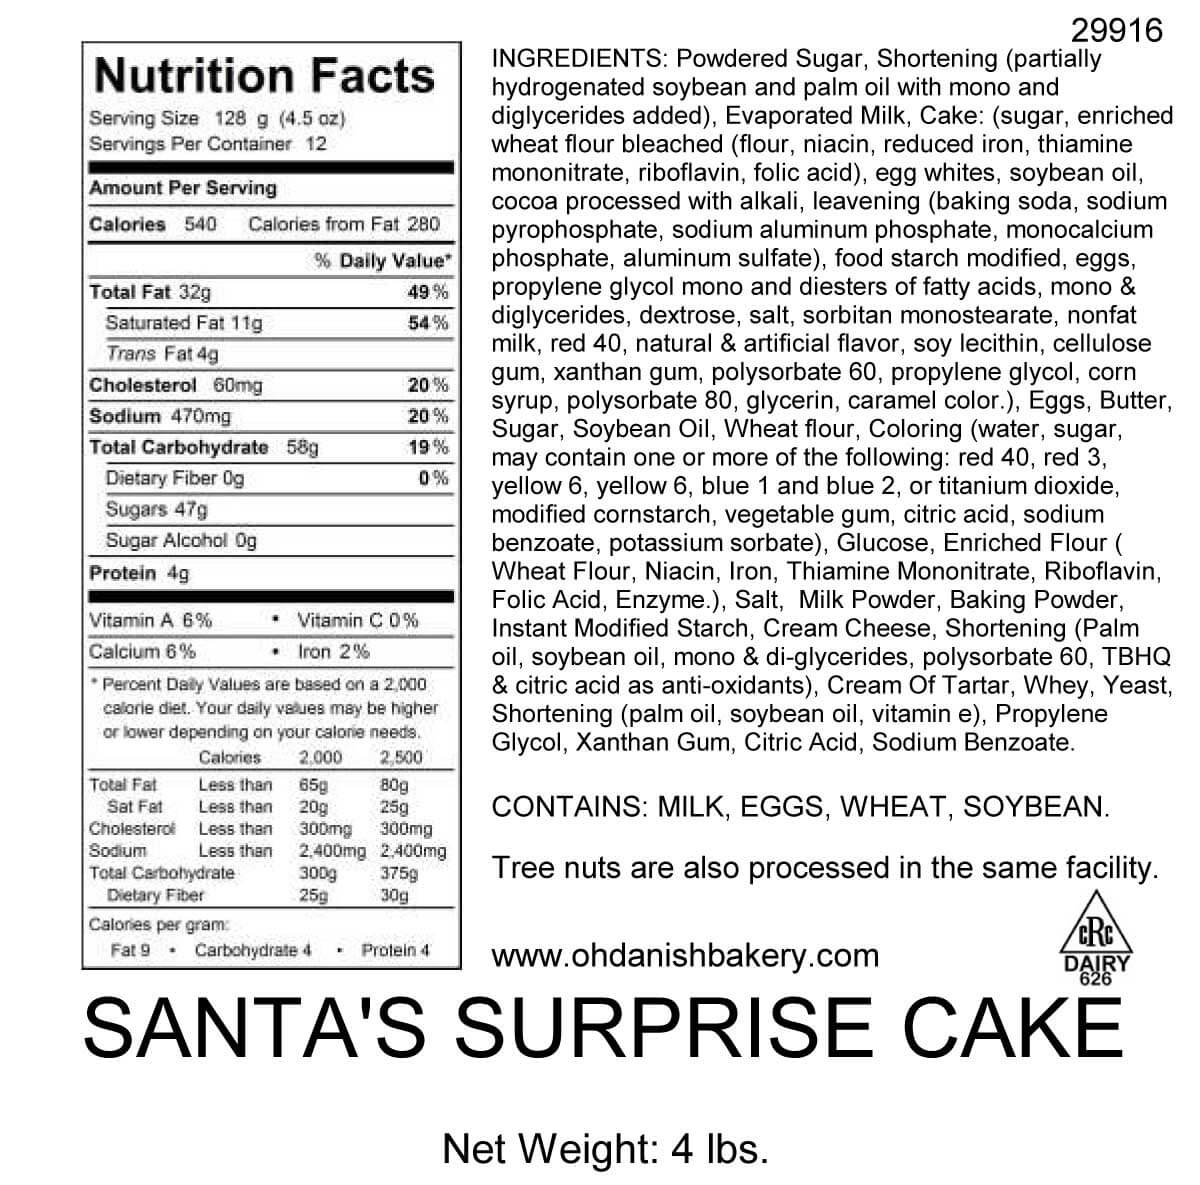 Nutritional Label for Santa's Surprise Cake